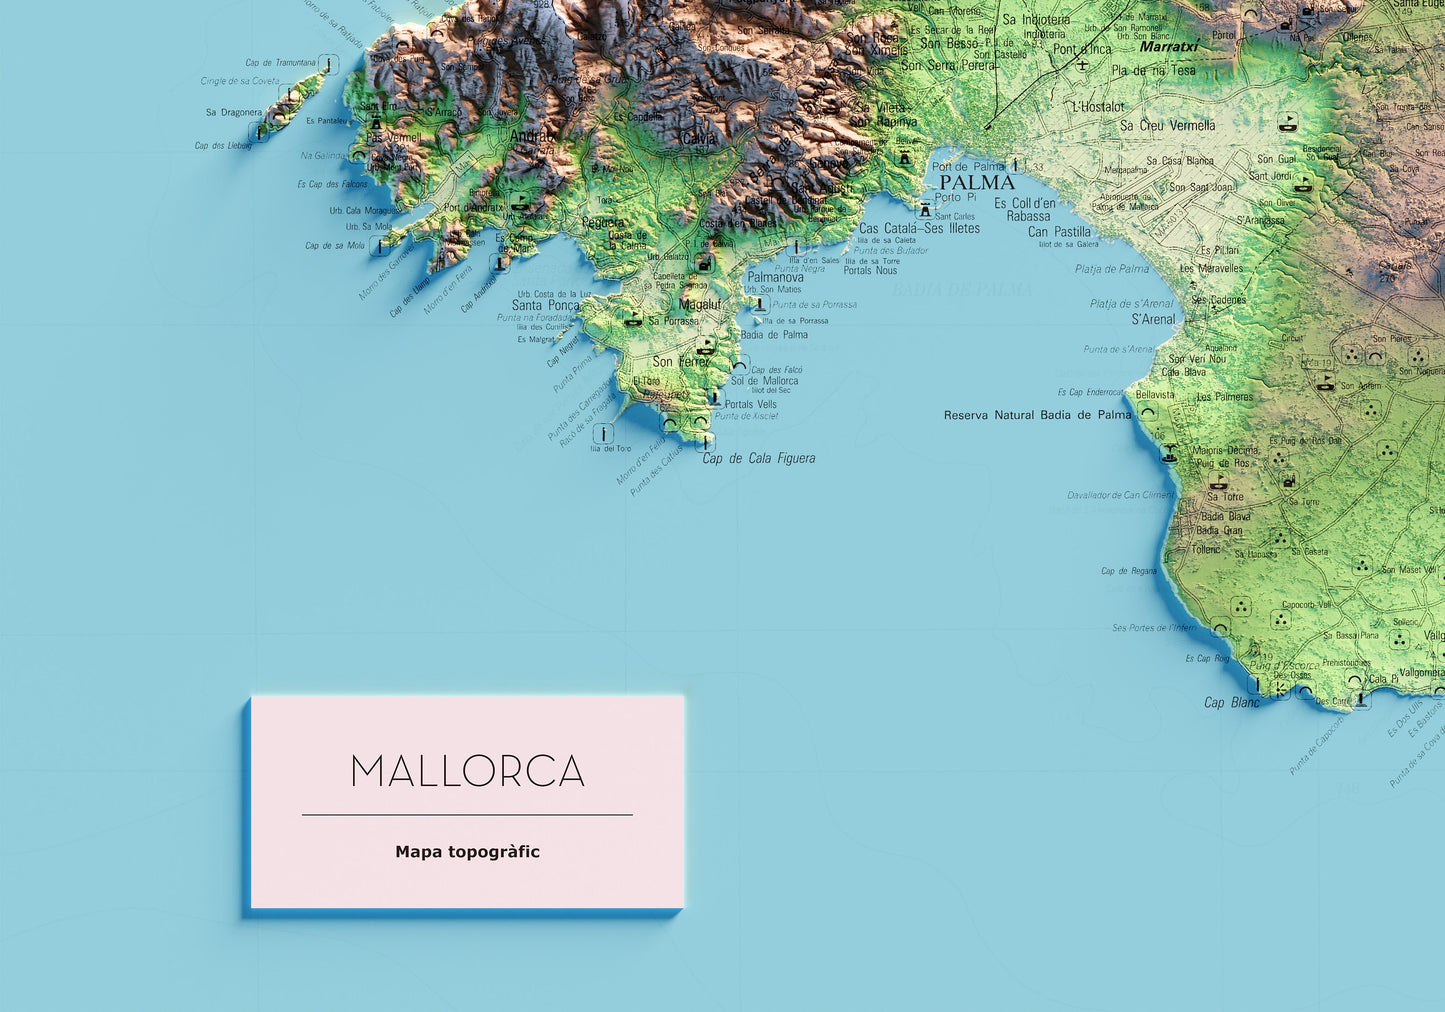 MALLORCA. Mapa topográfico.